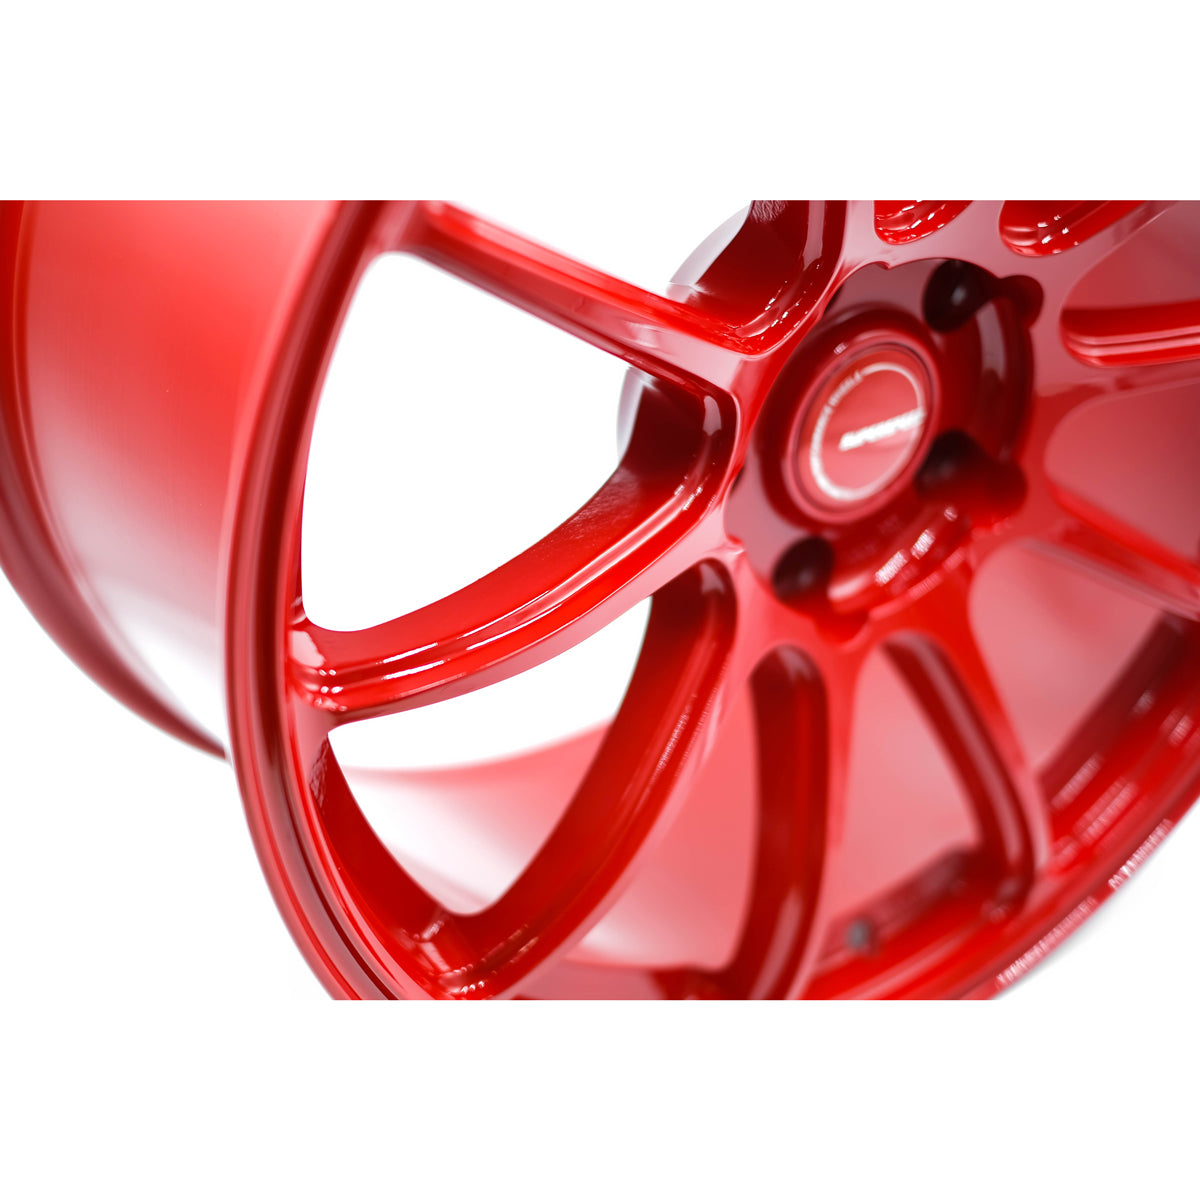 Superspeed FlowForm RF03RR Alloy Wheel (Hyper Red) — 18"